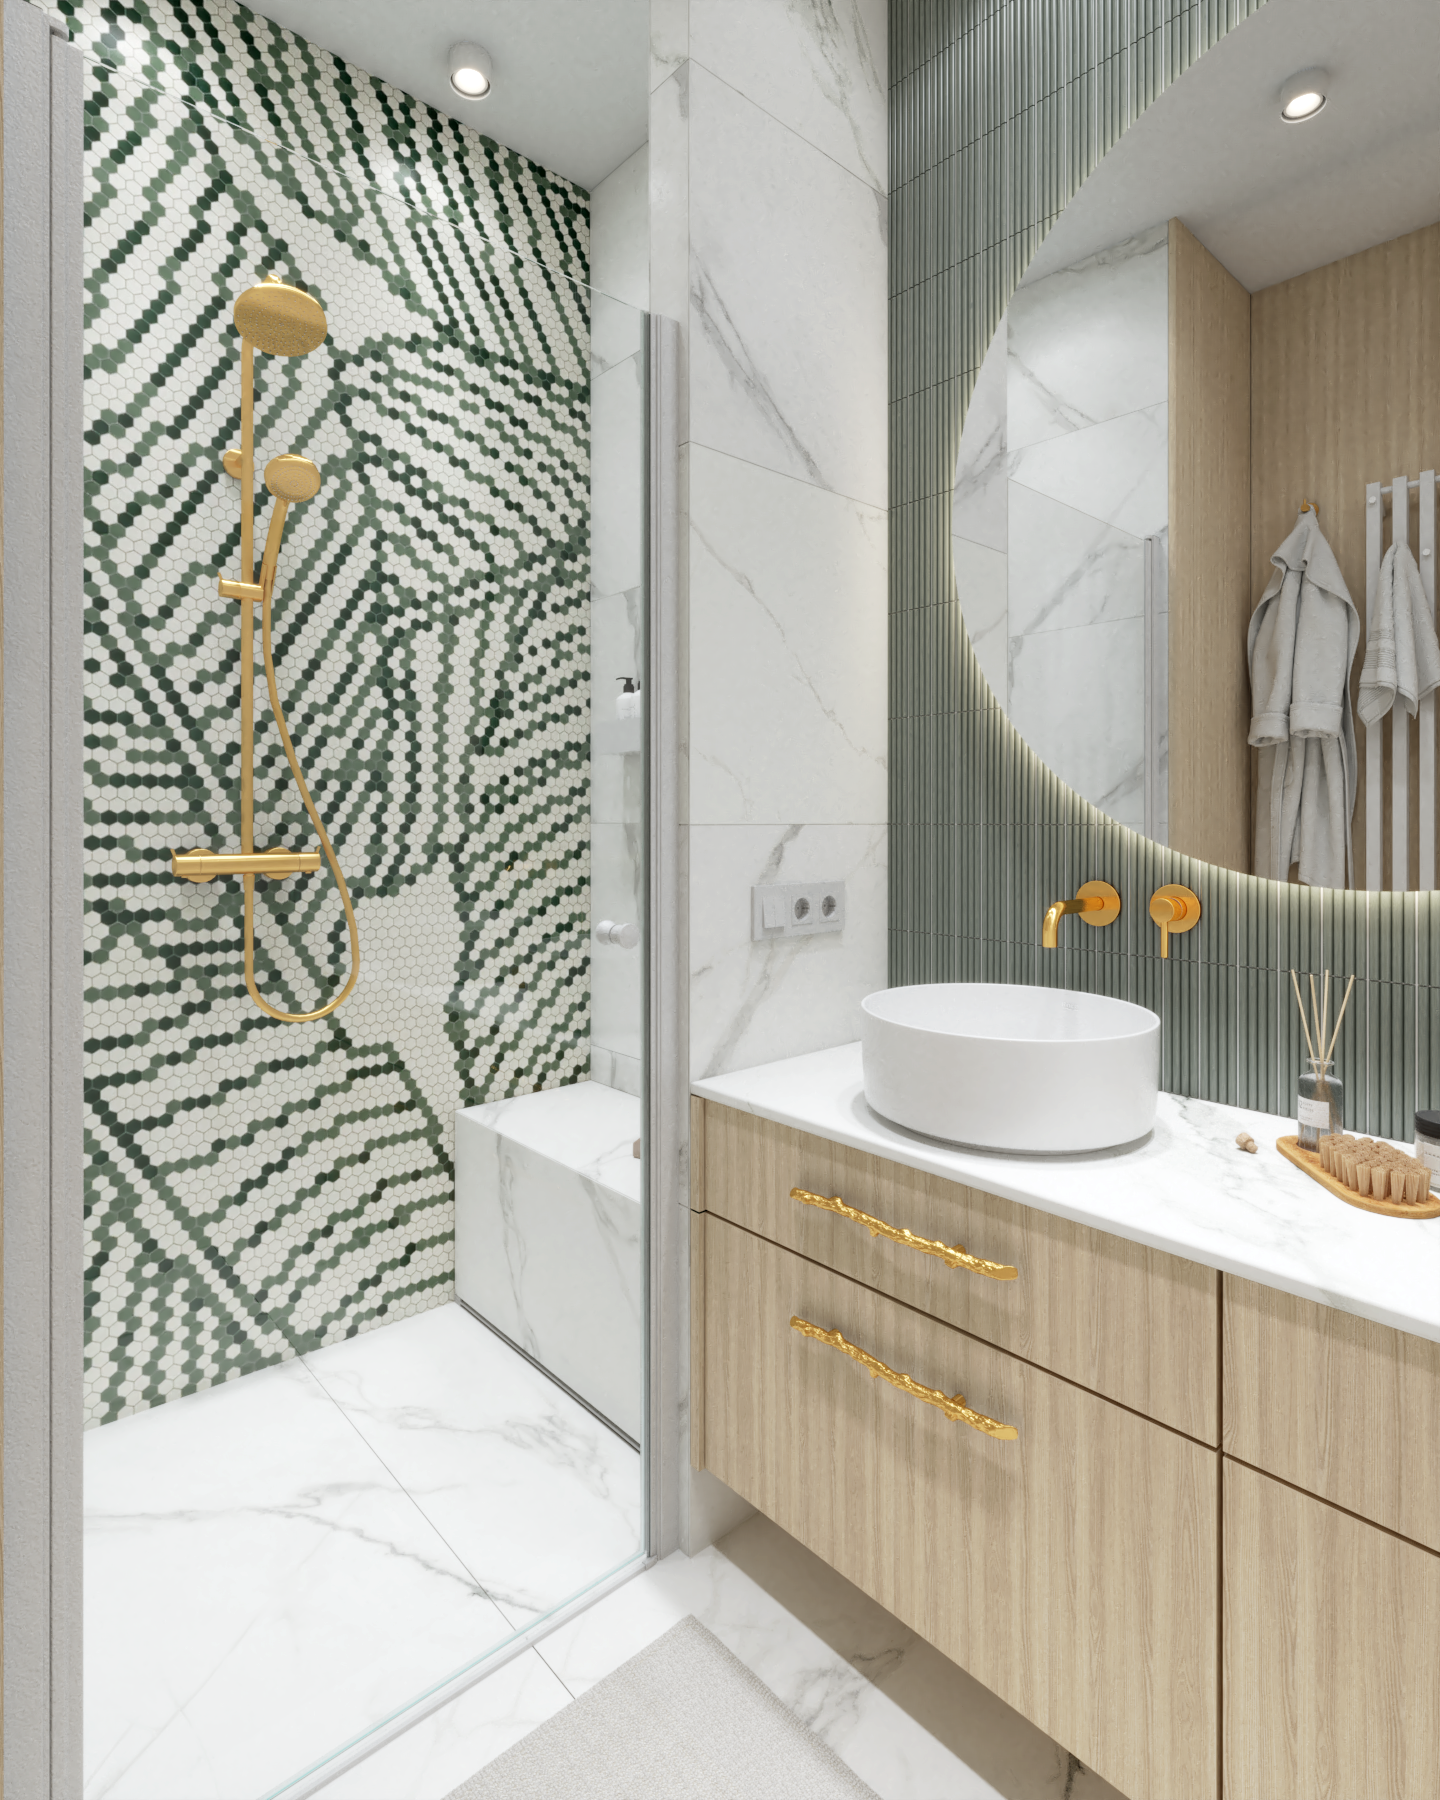 Bathroom mosaic with banana leaf pattern - Trufle Mozaiki